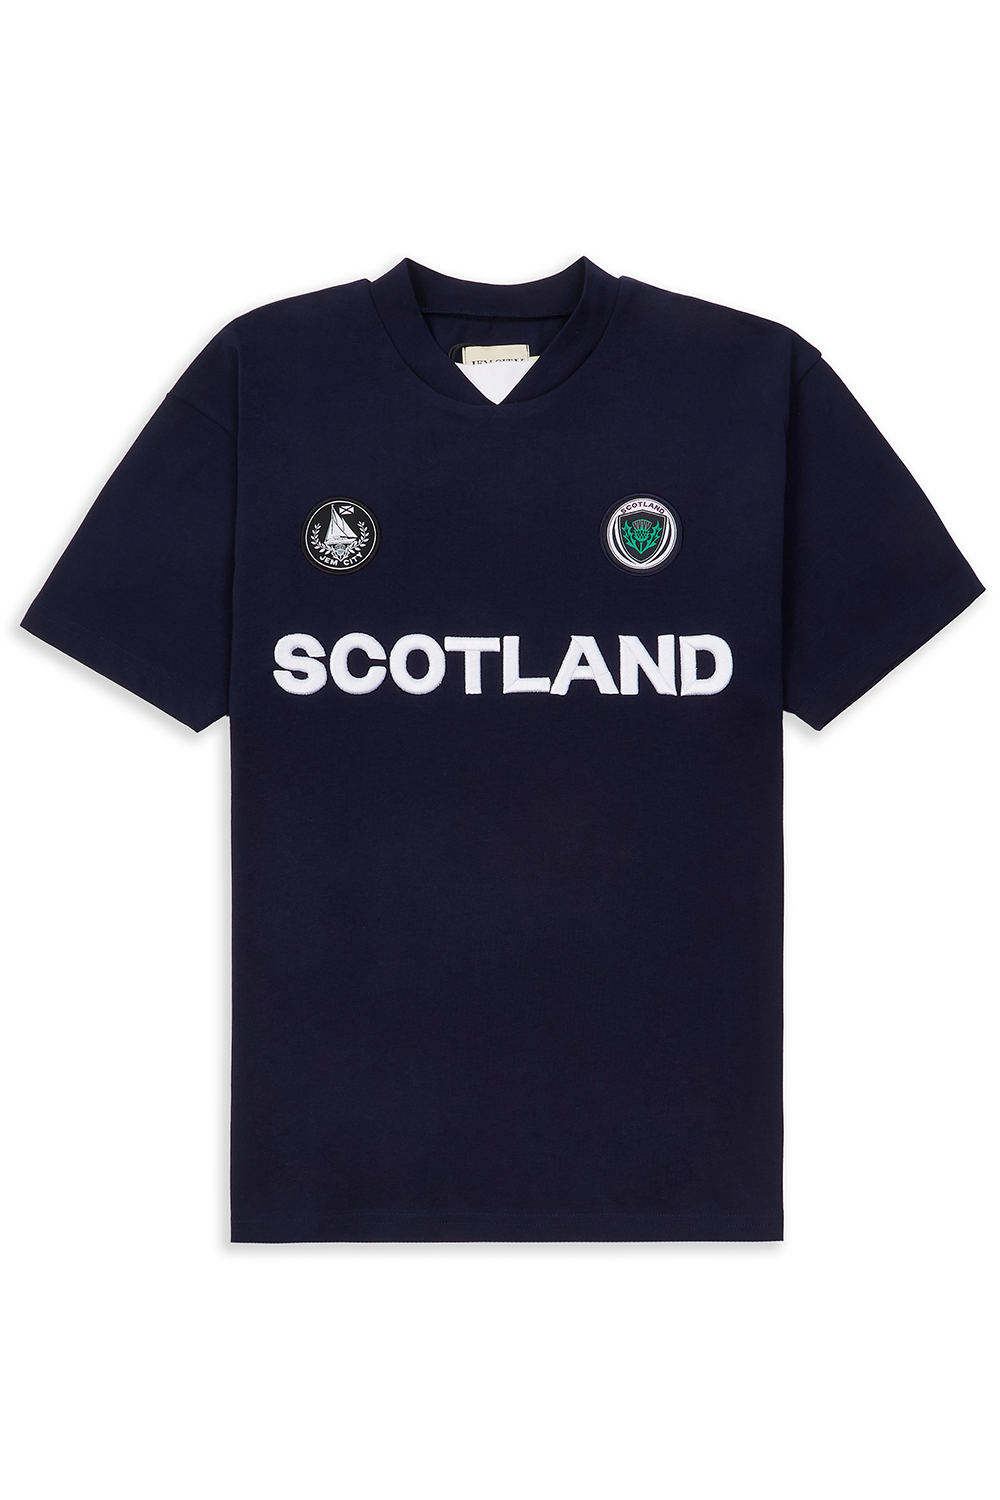 Scotland Euros Inspired T-Shirt